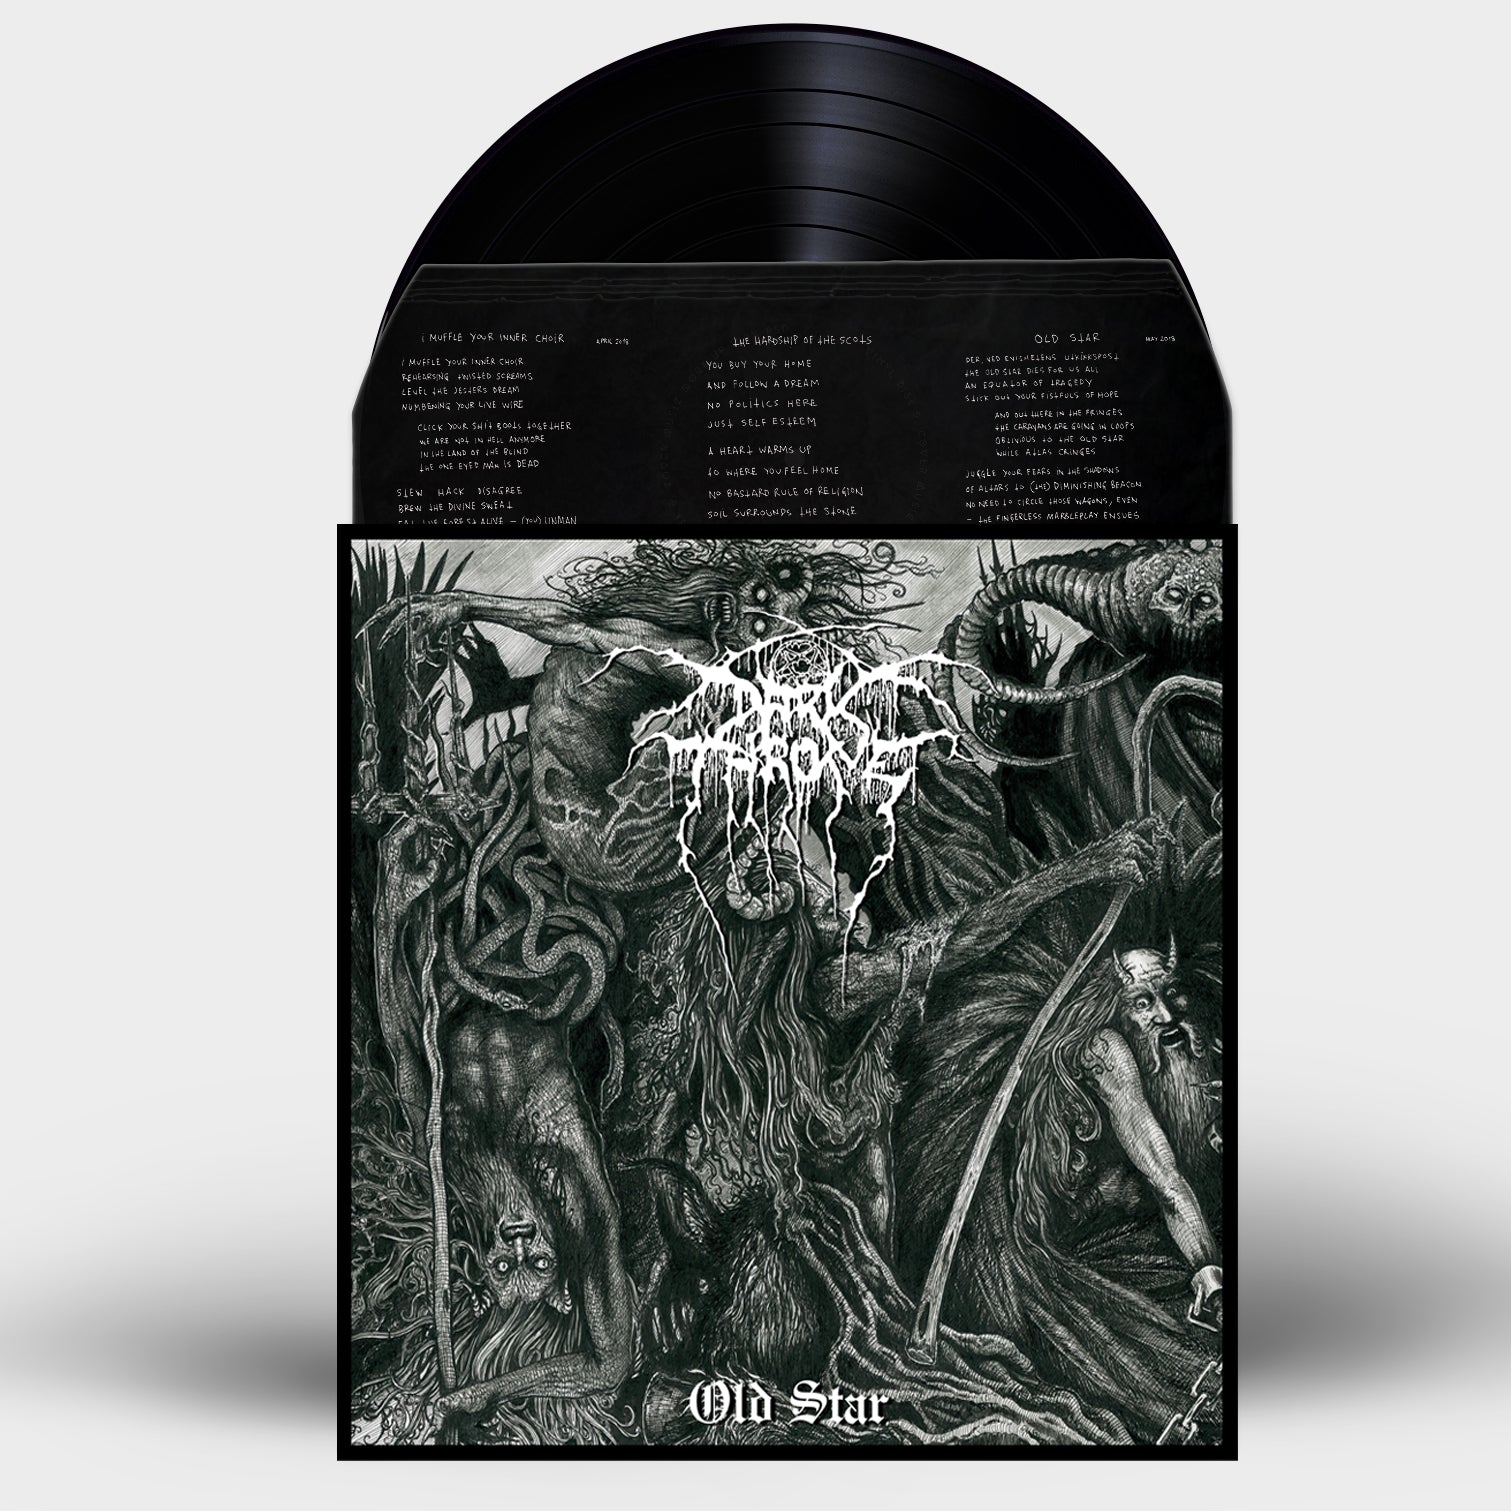 Darkthrone "Old Star" Black Vinyl